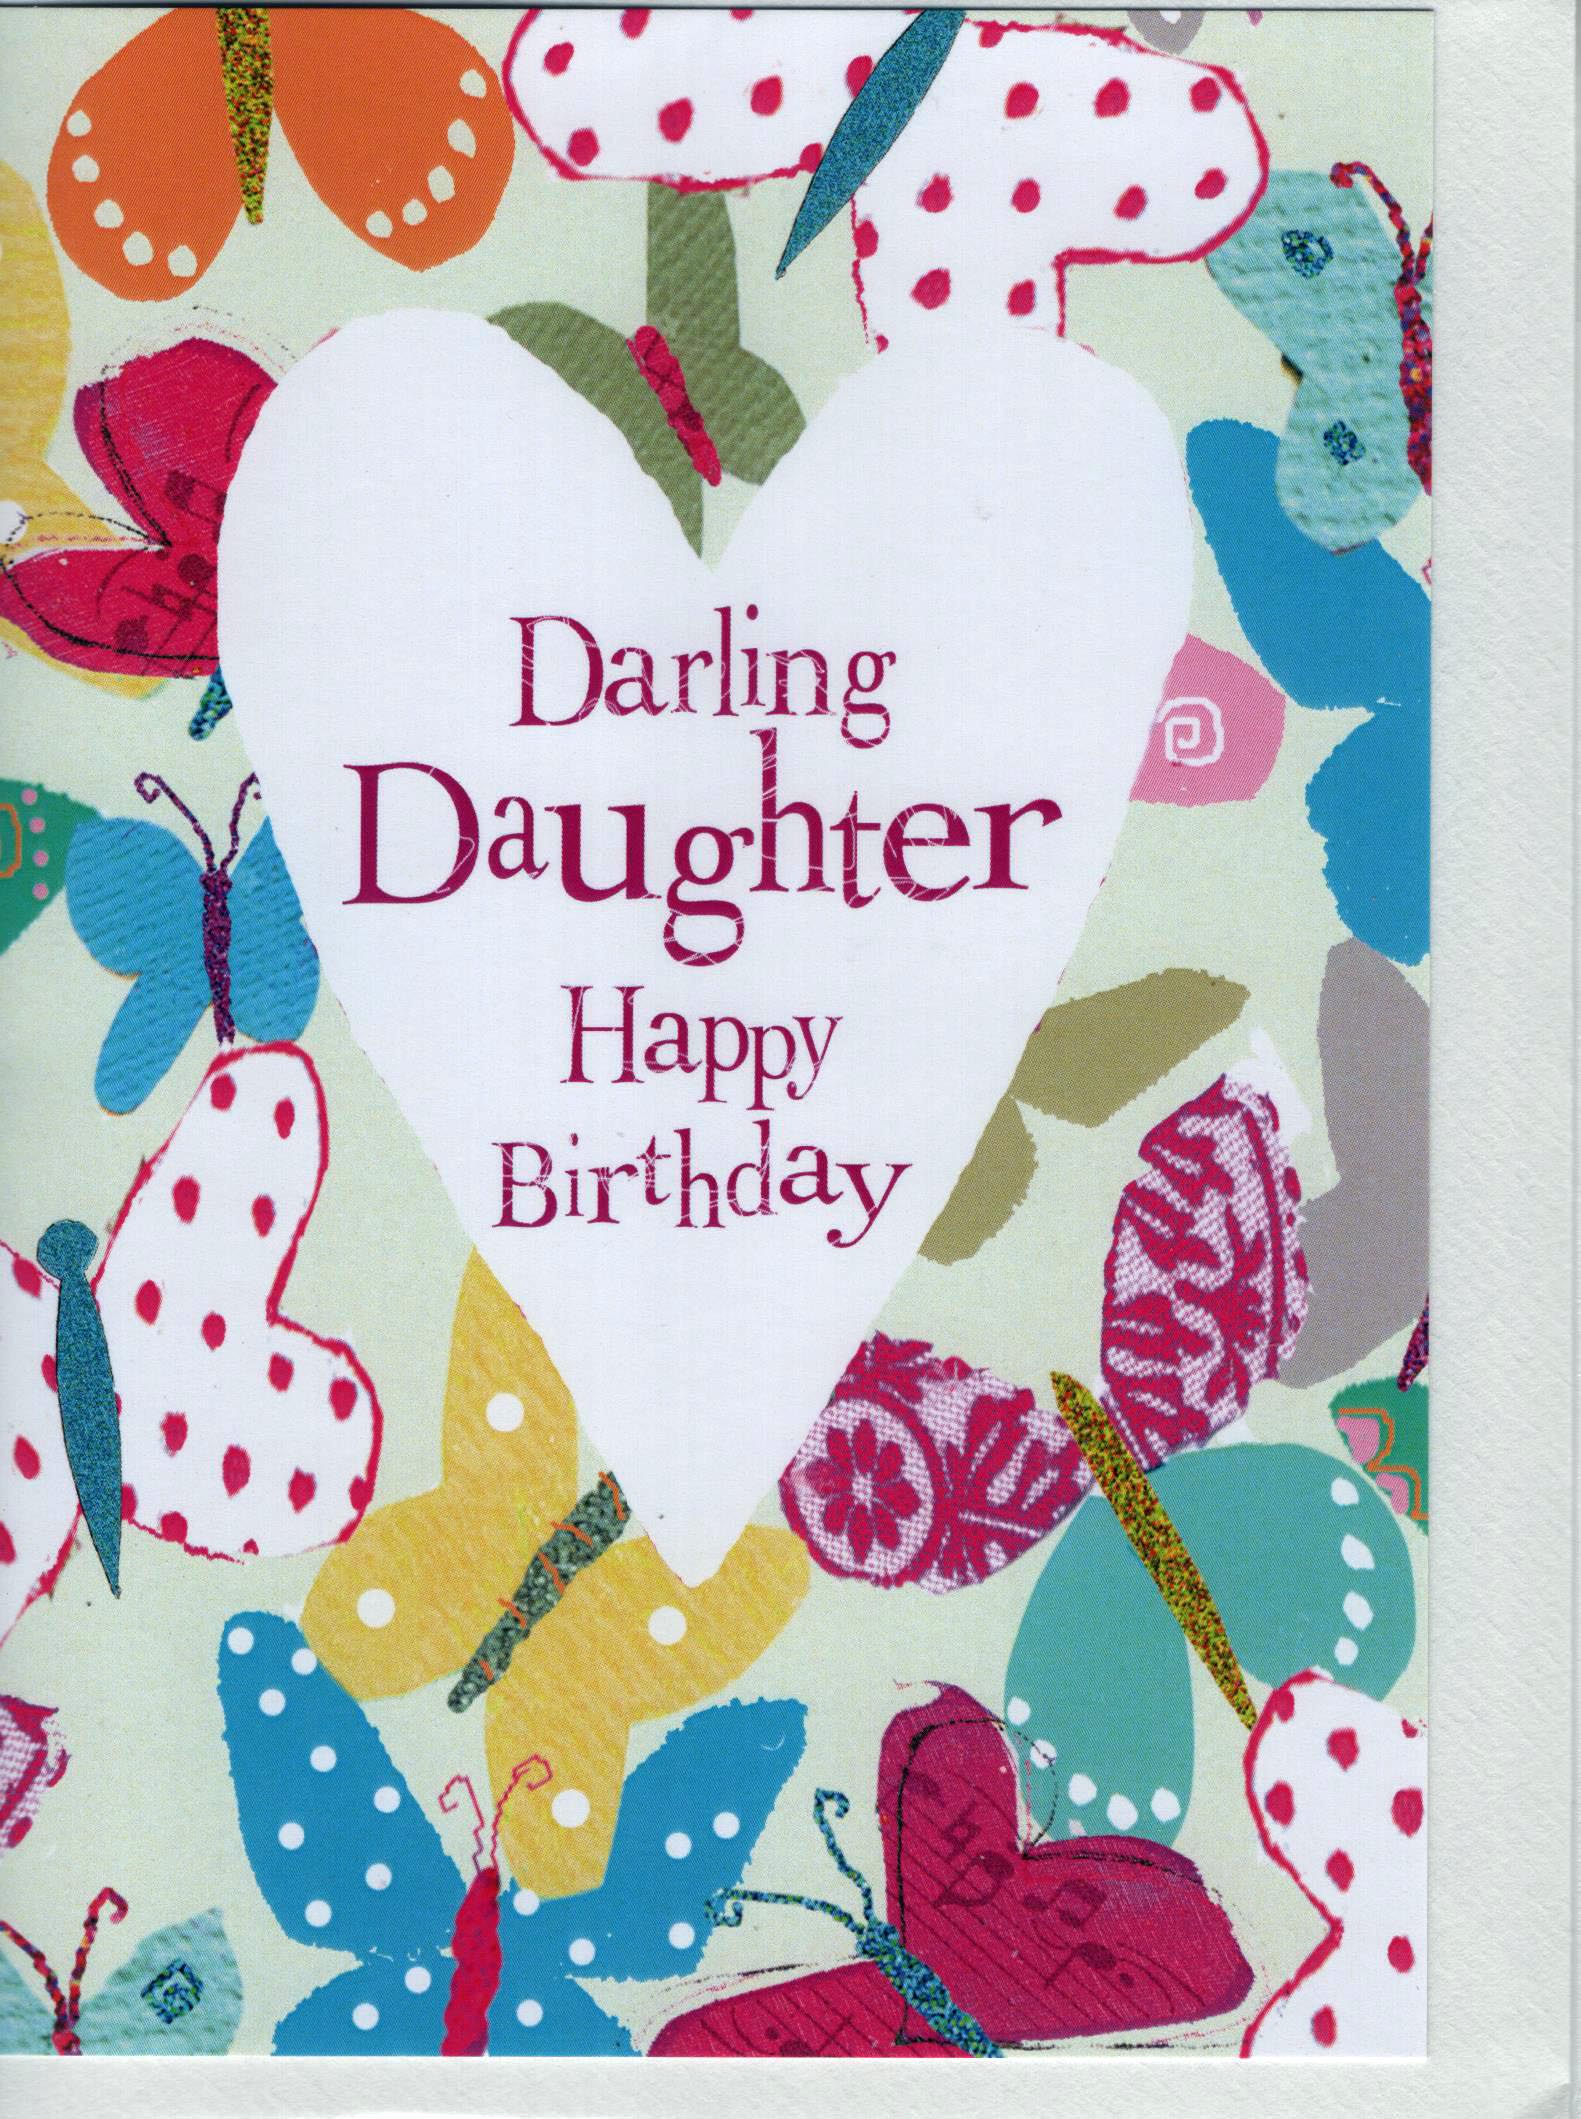 Darling Daughter Happy Birthday